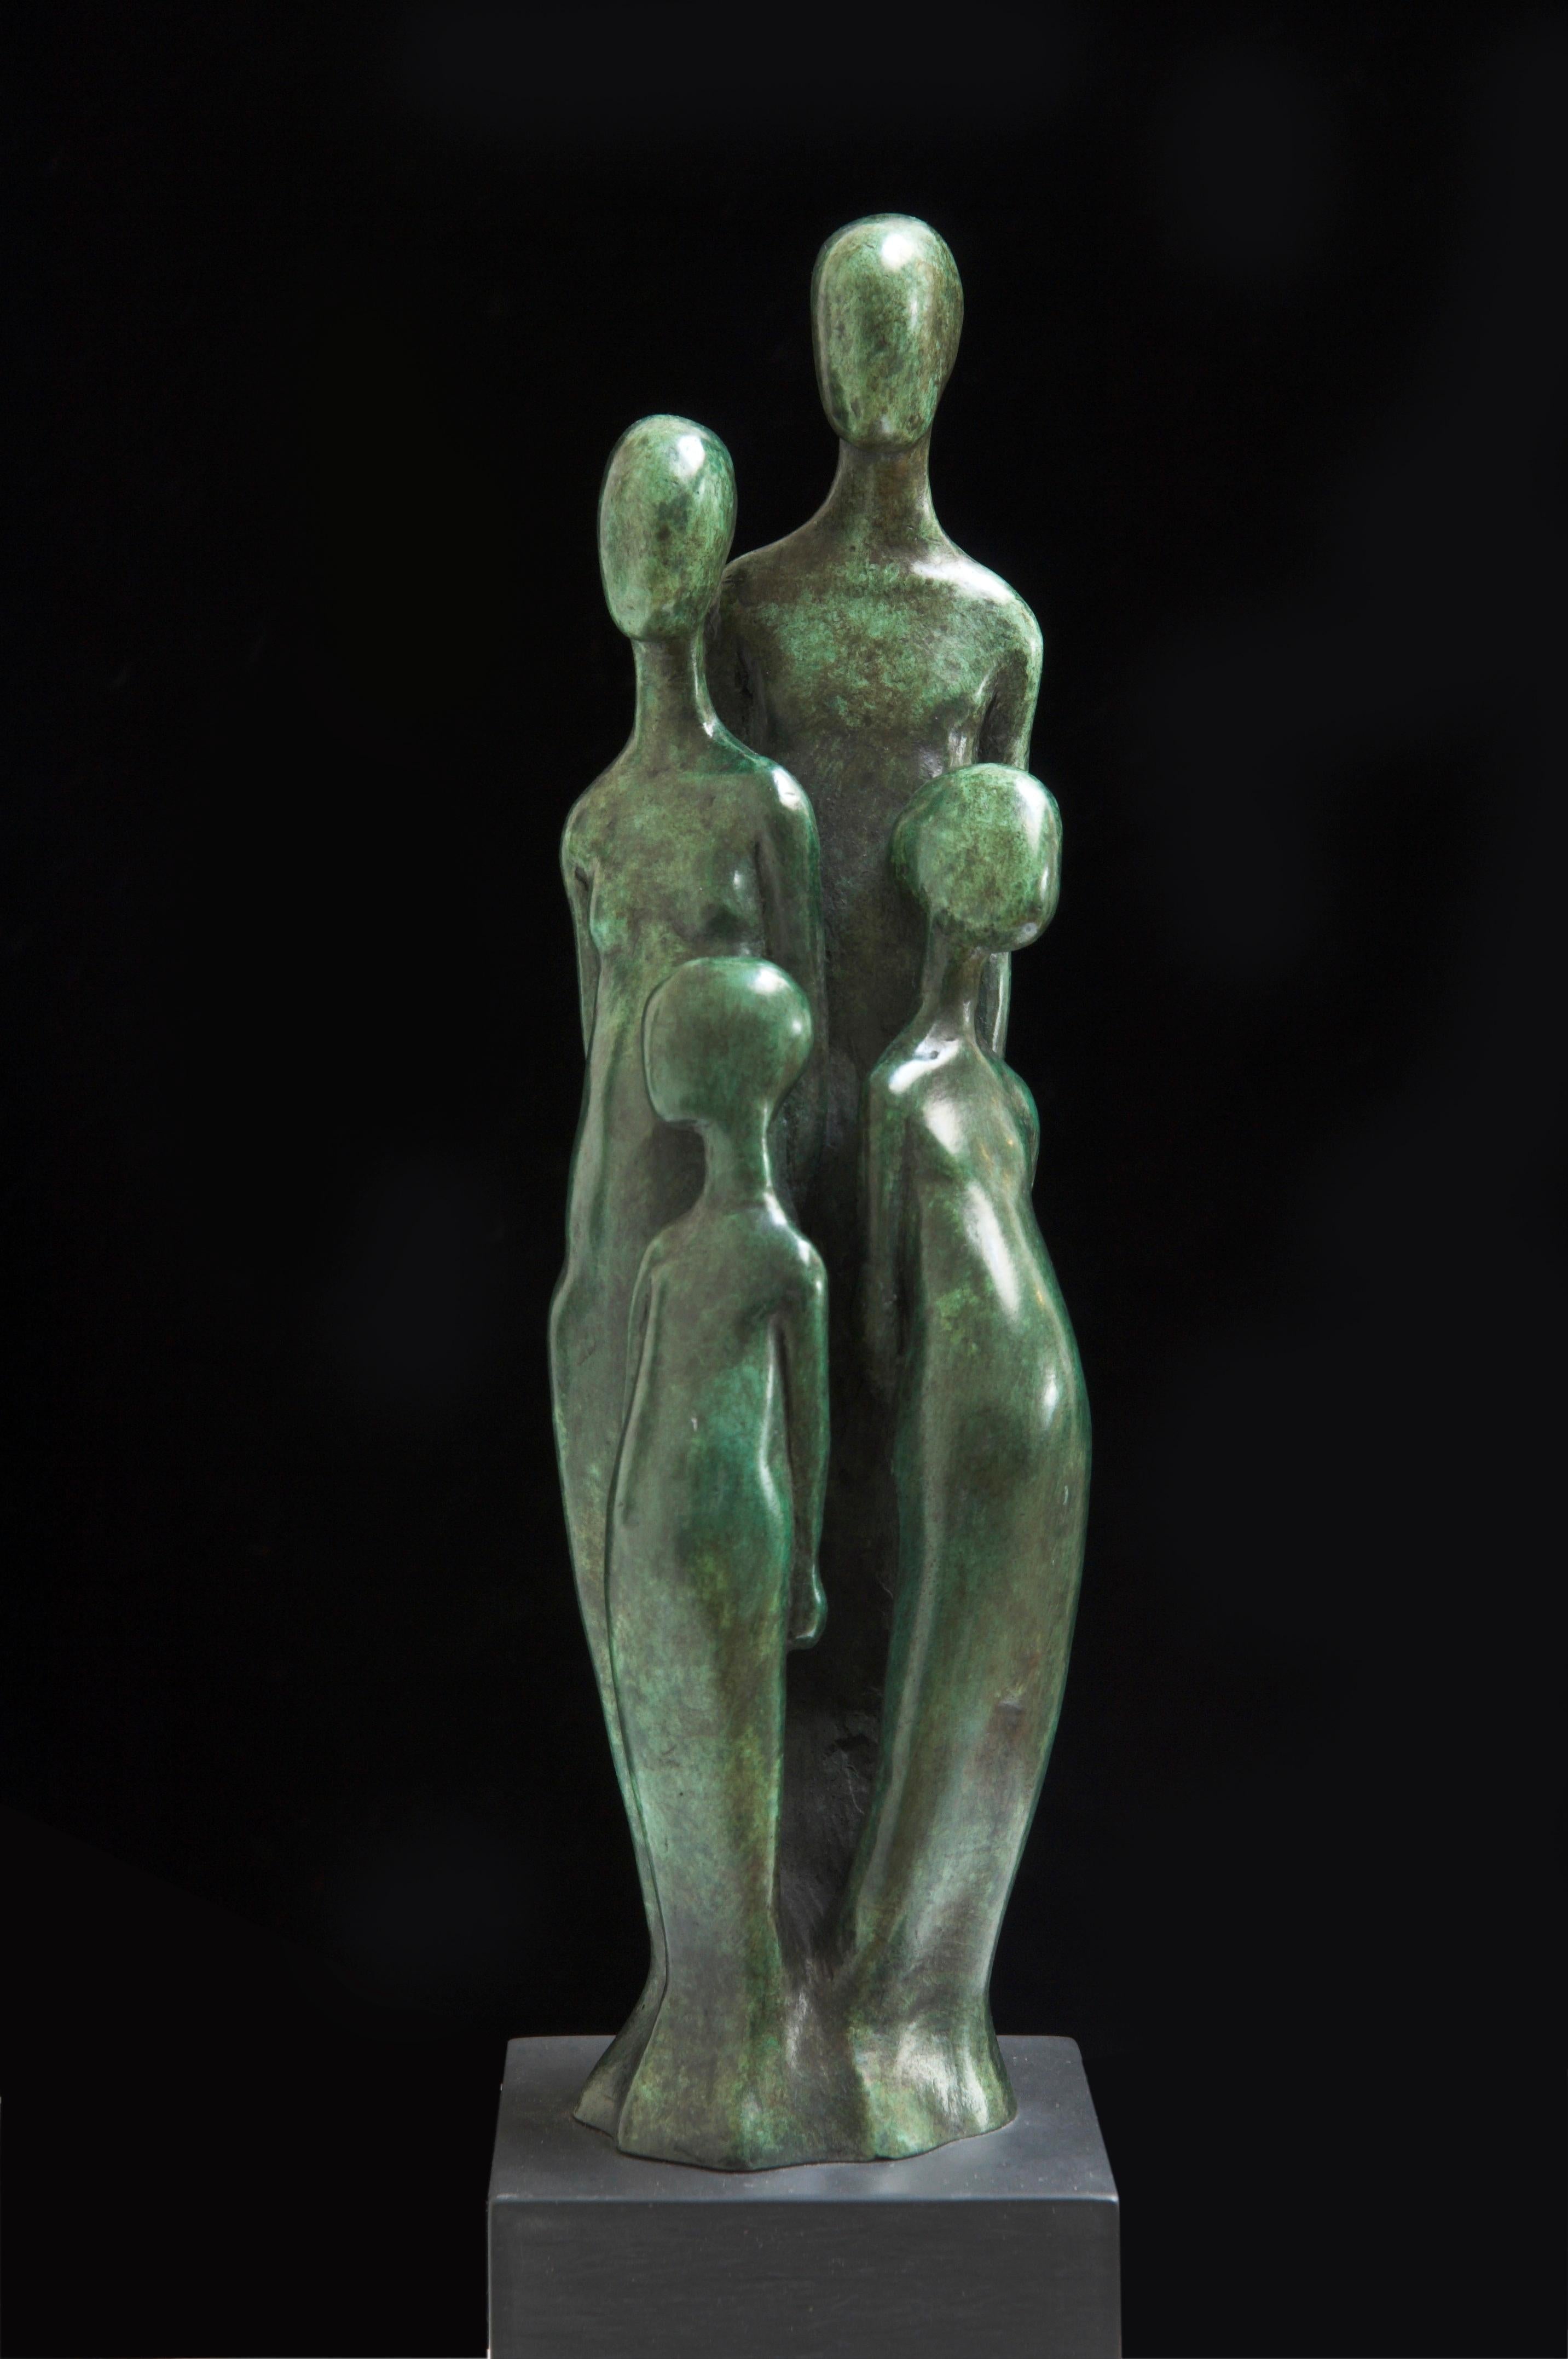 Nicola Godden Figurative Sculpture - La Famille-original figurative bronze sculpture-artwork for sale-contemporary 